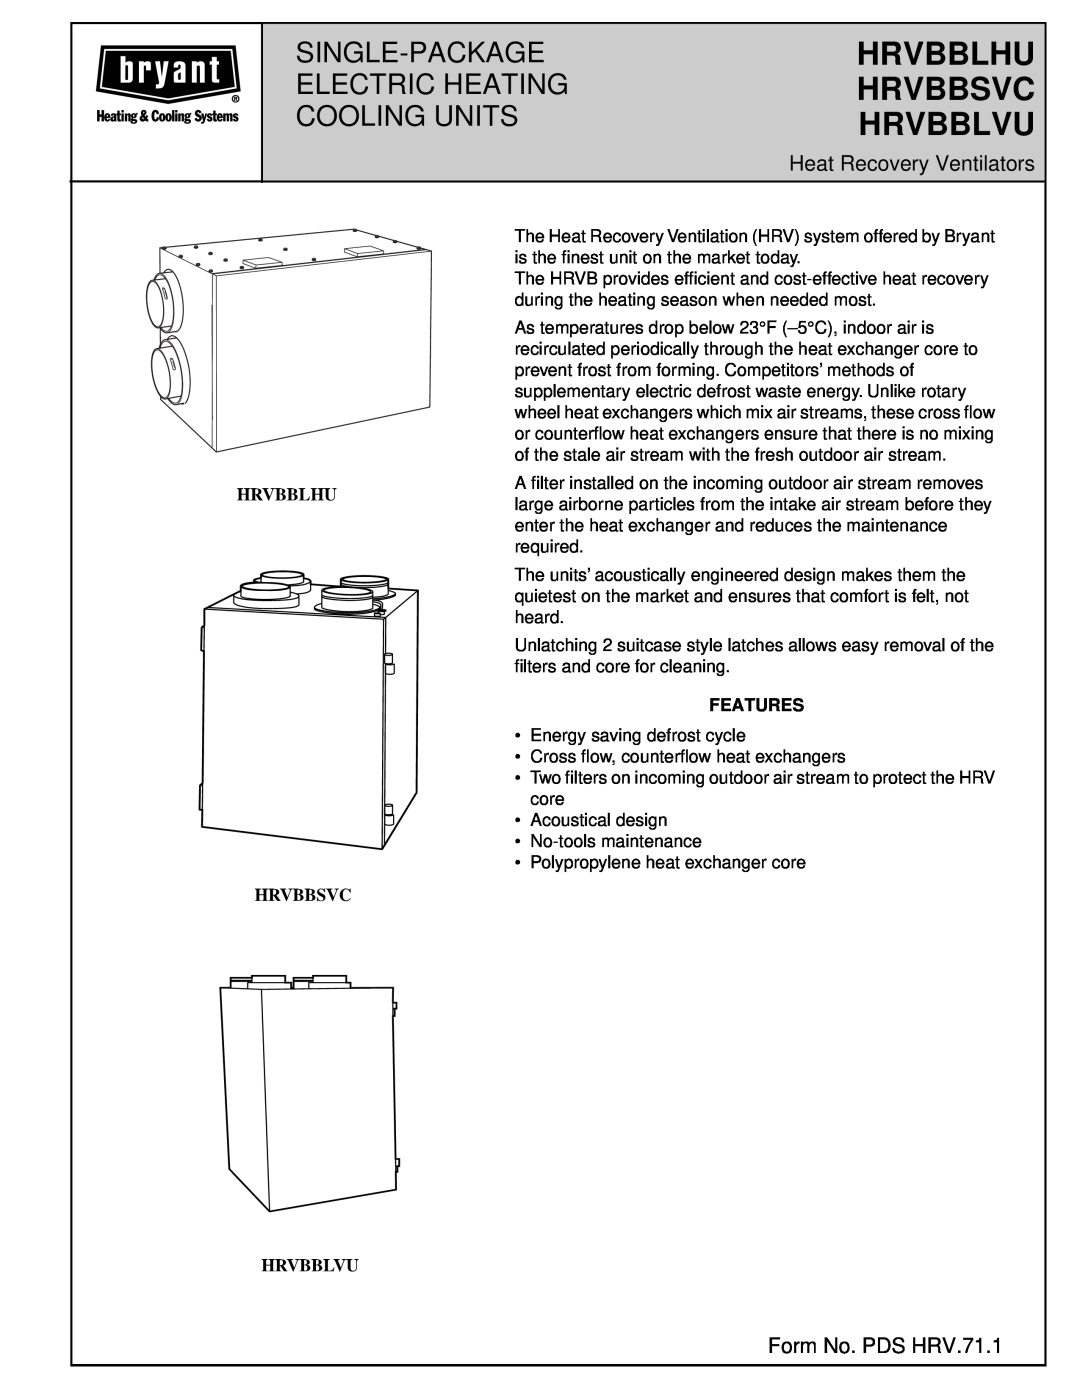 Bryant HRVBBLHU, HRVBBSVC manual Features, Hrvbblhu, Hrvbbsvc, Hrvbblvu, Single-Package, Electric Heating, Cooling Units 